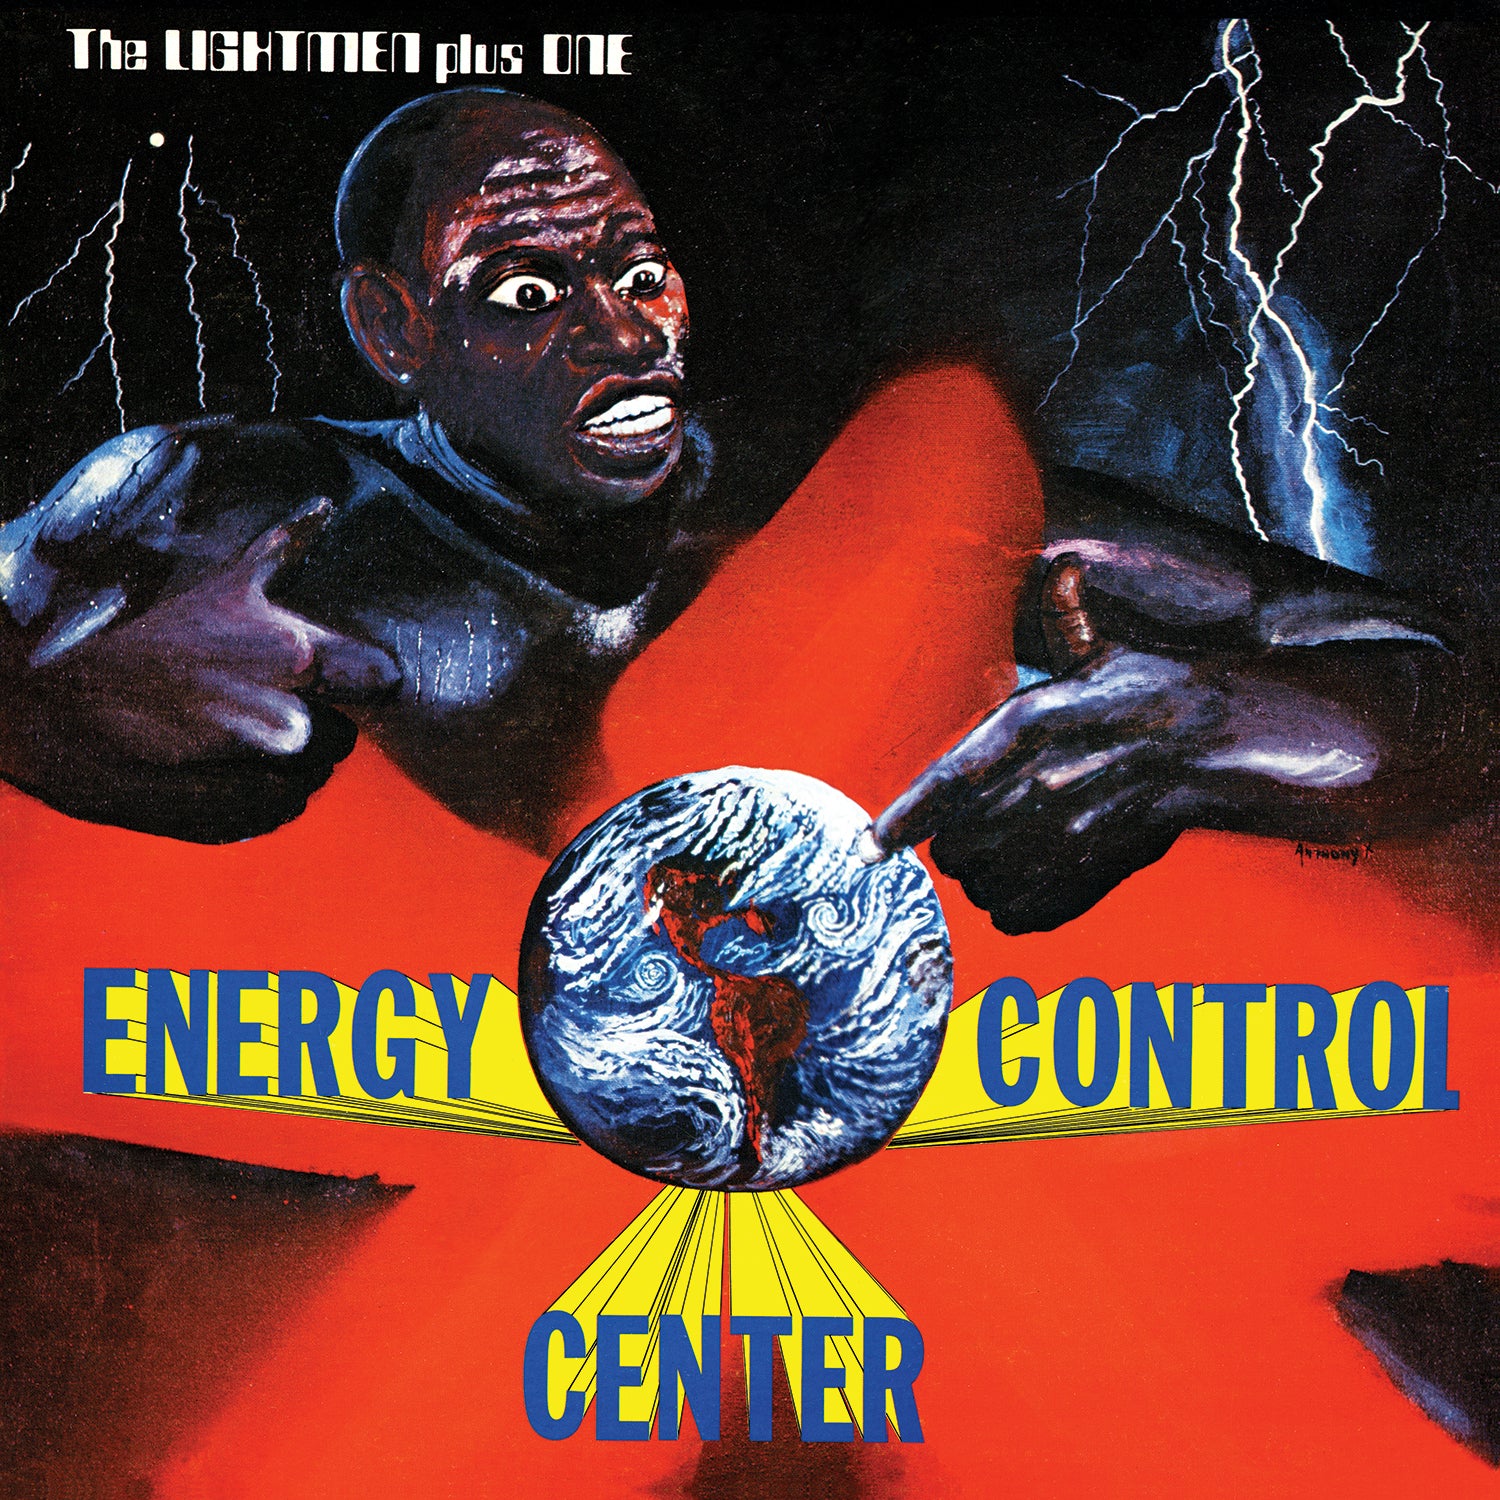 The Lightmen Plus One – Energy Control Center